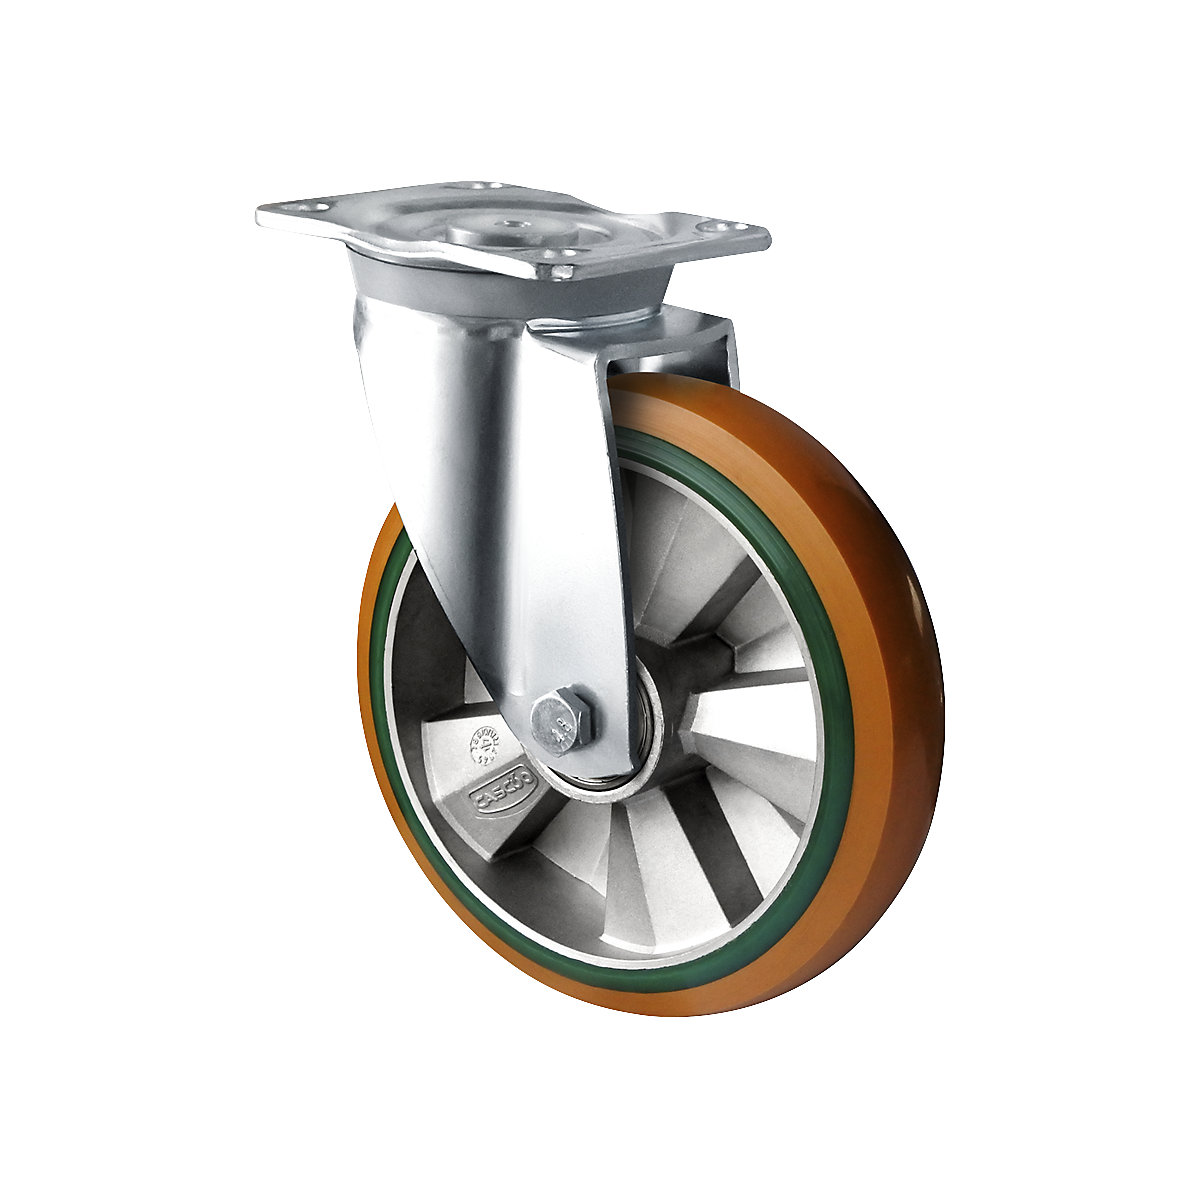 PU/PU elastic tyre, brown / green, wheel Ø x width 125 x 50 mm, 2+ items, swivel castor